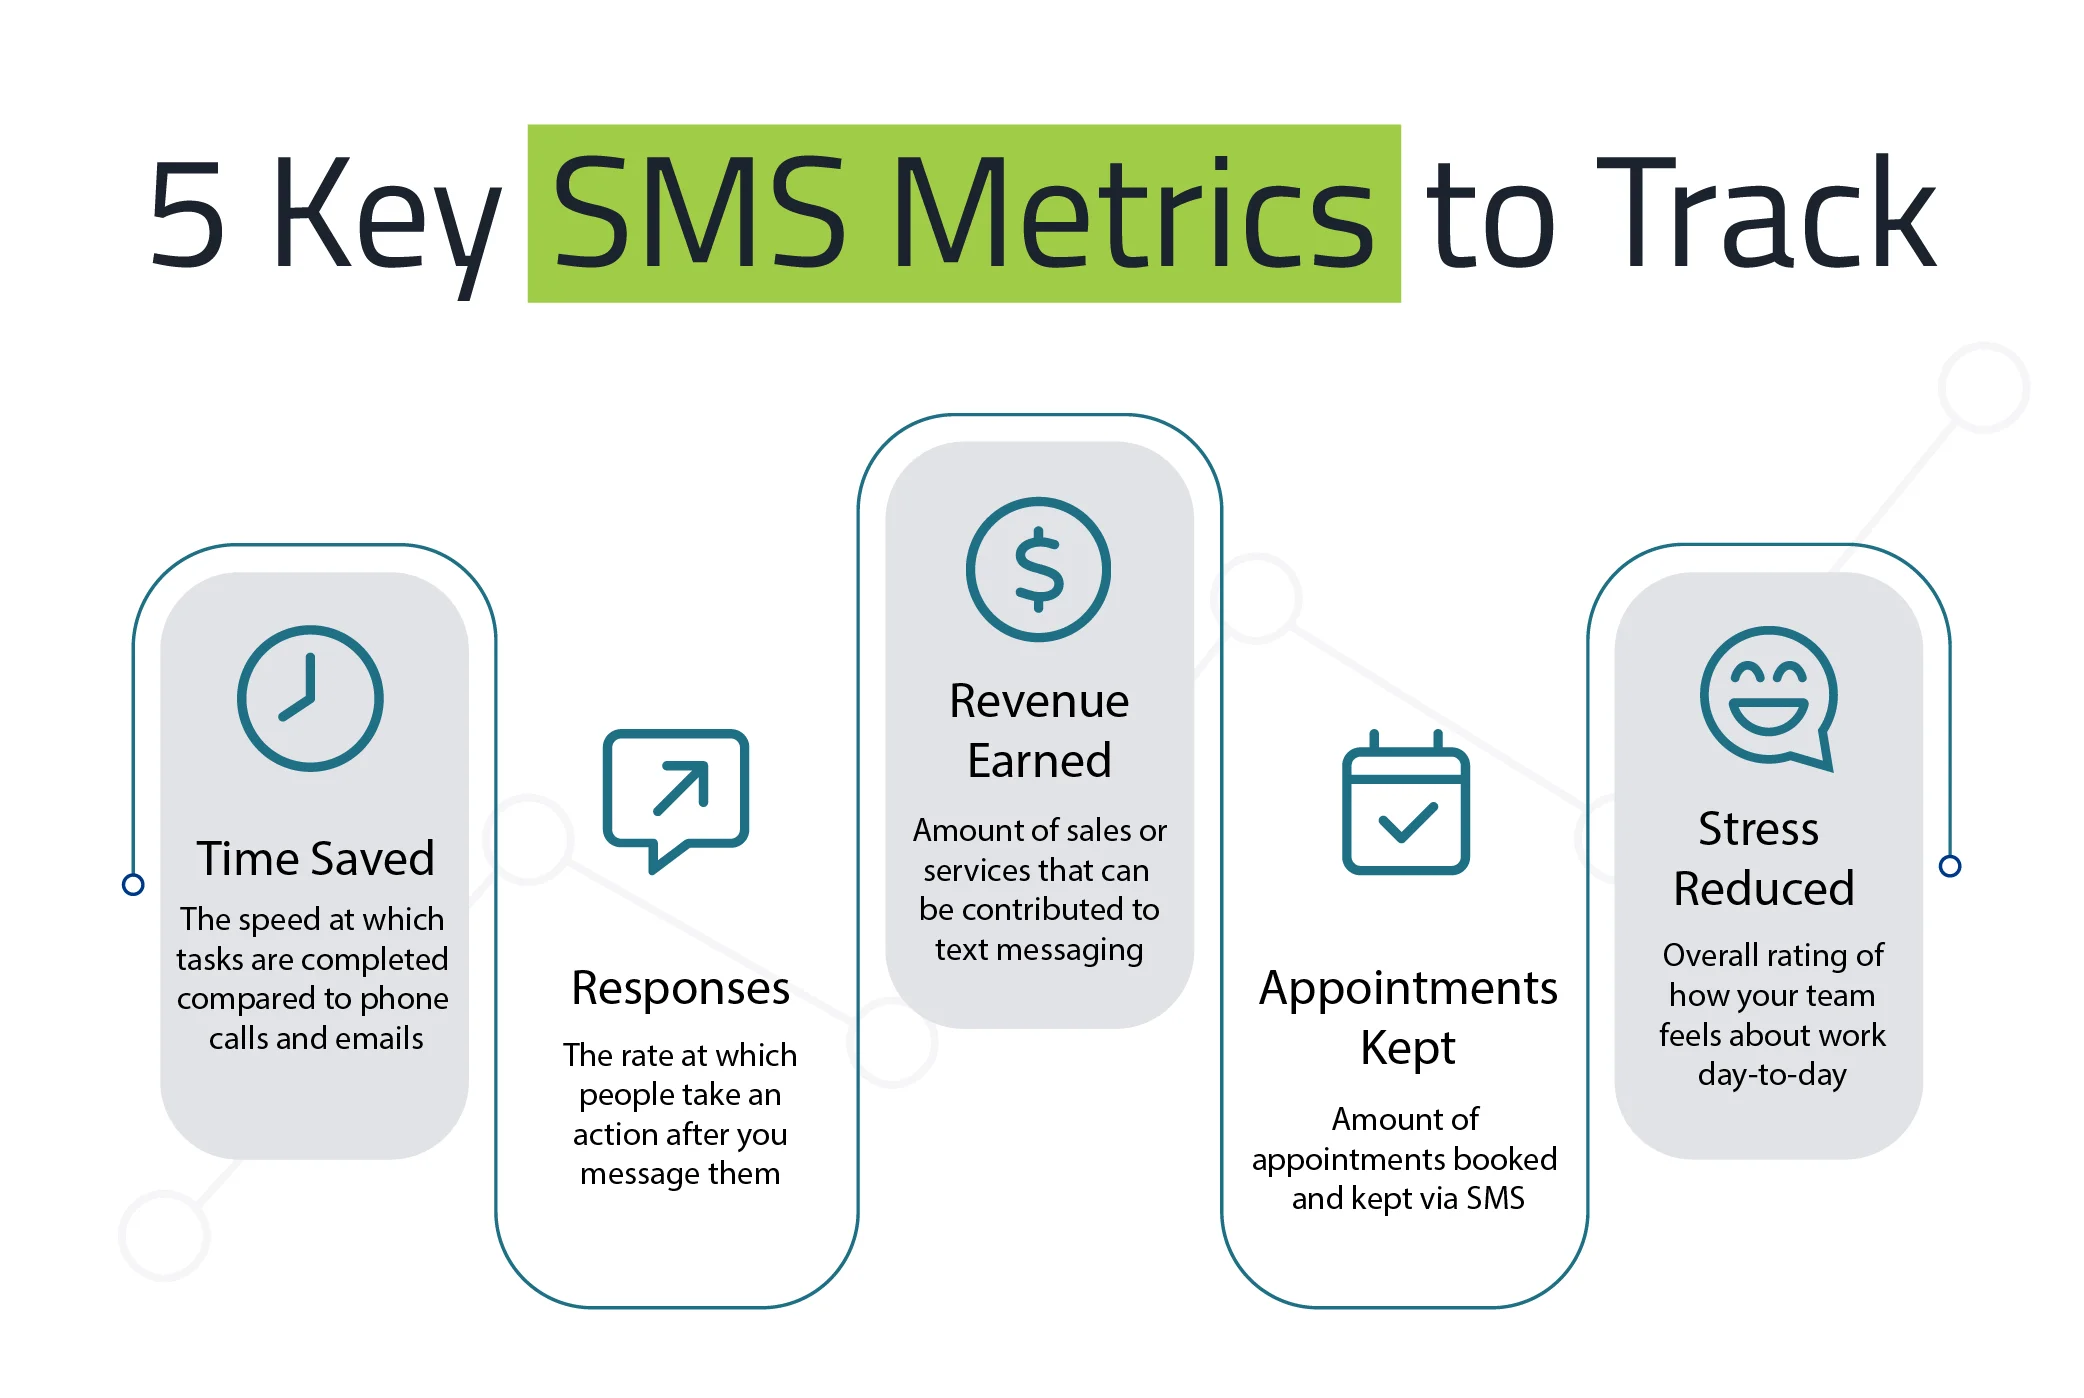 5 Key SMS Metrics to Track for Proving Return on Investment (ROI)